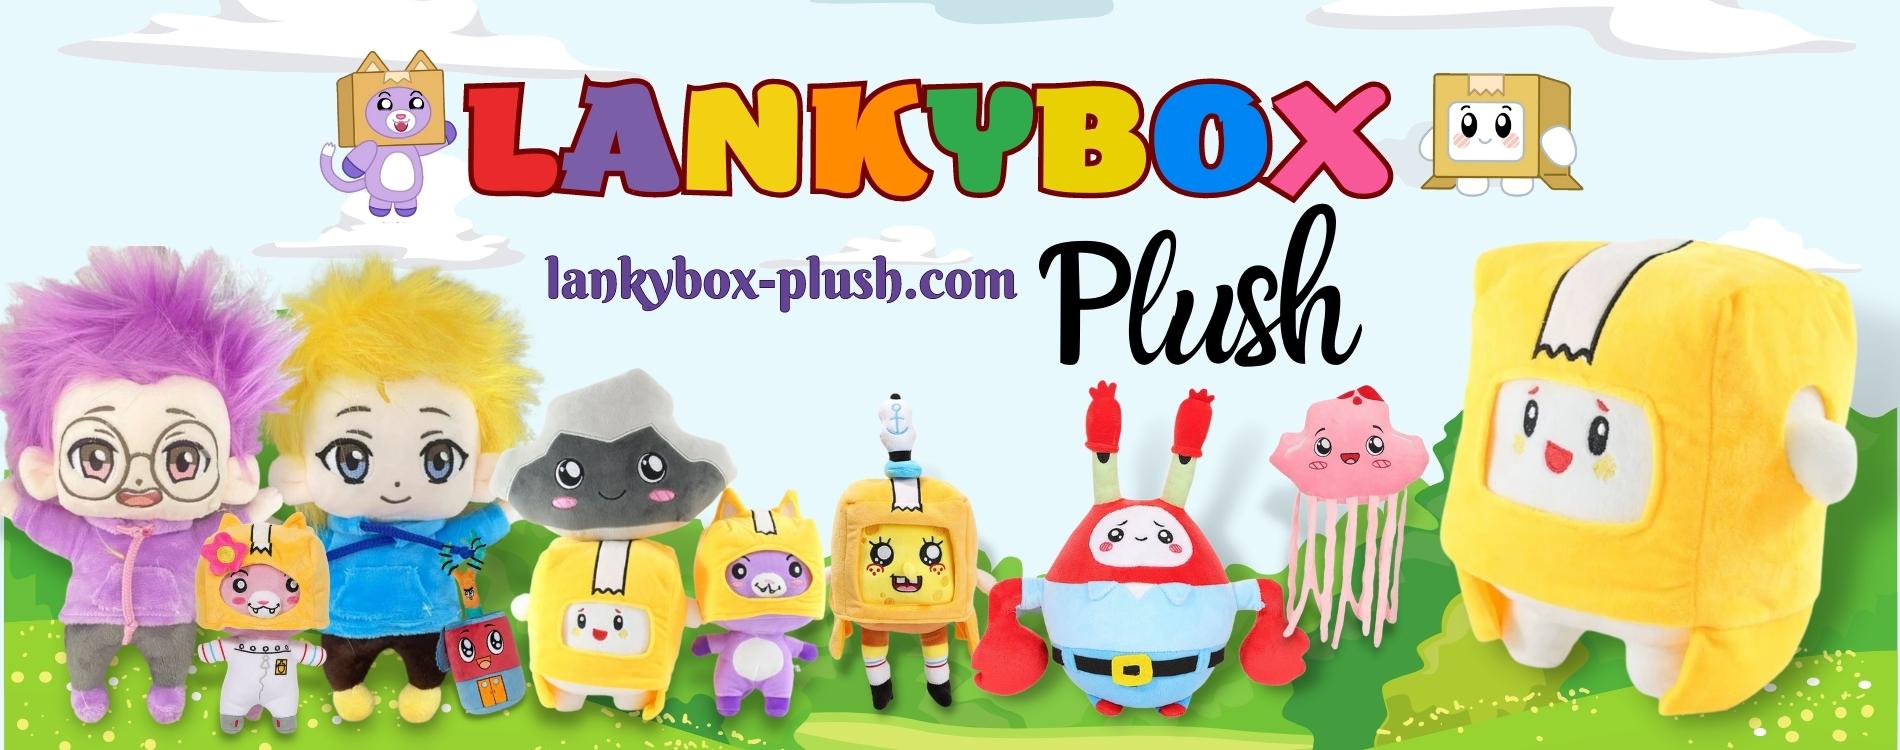 lanky box plush banner 2